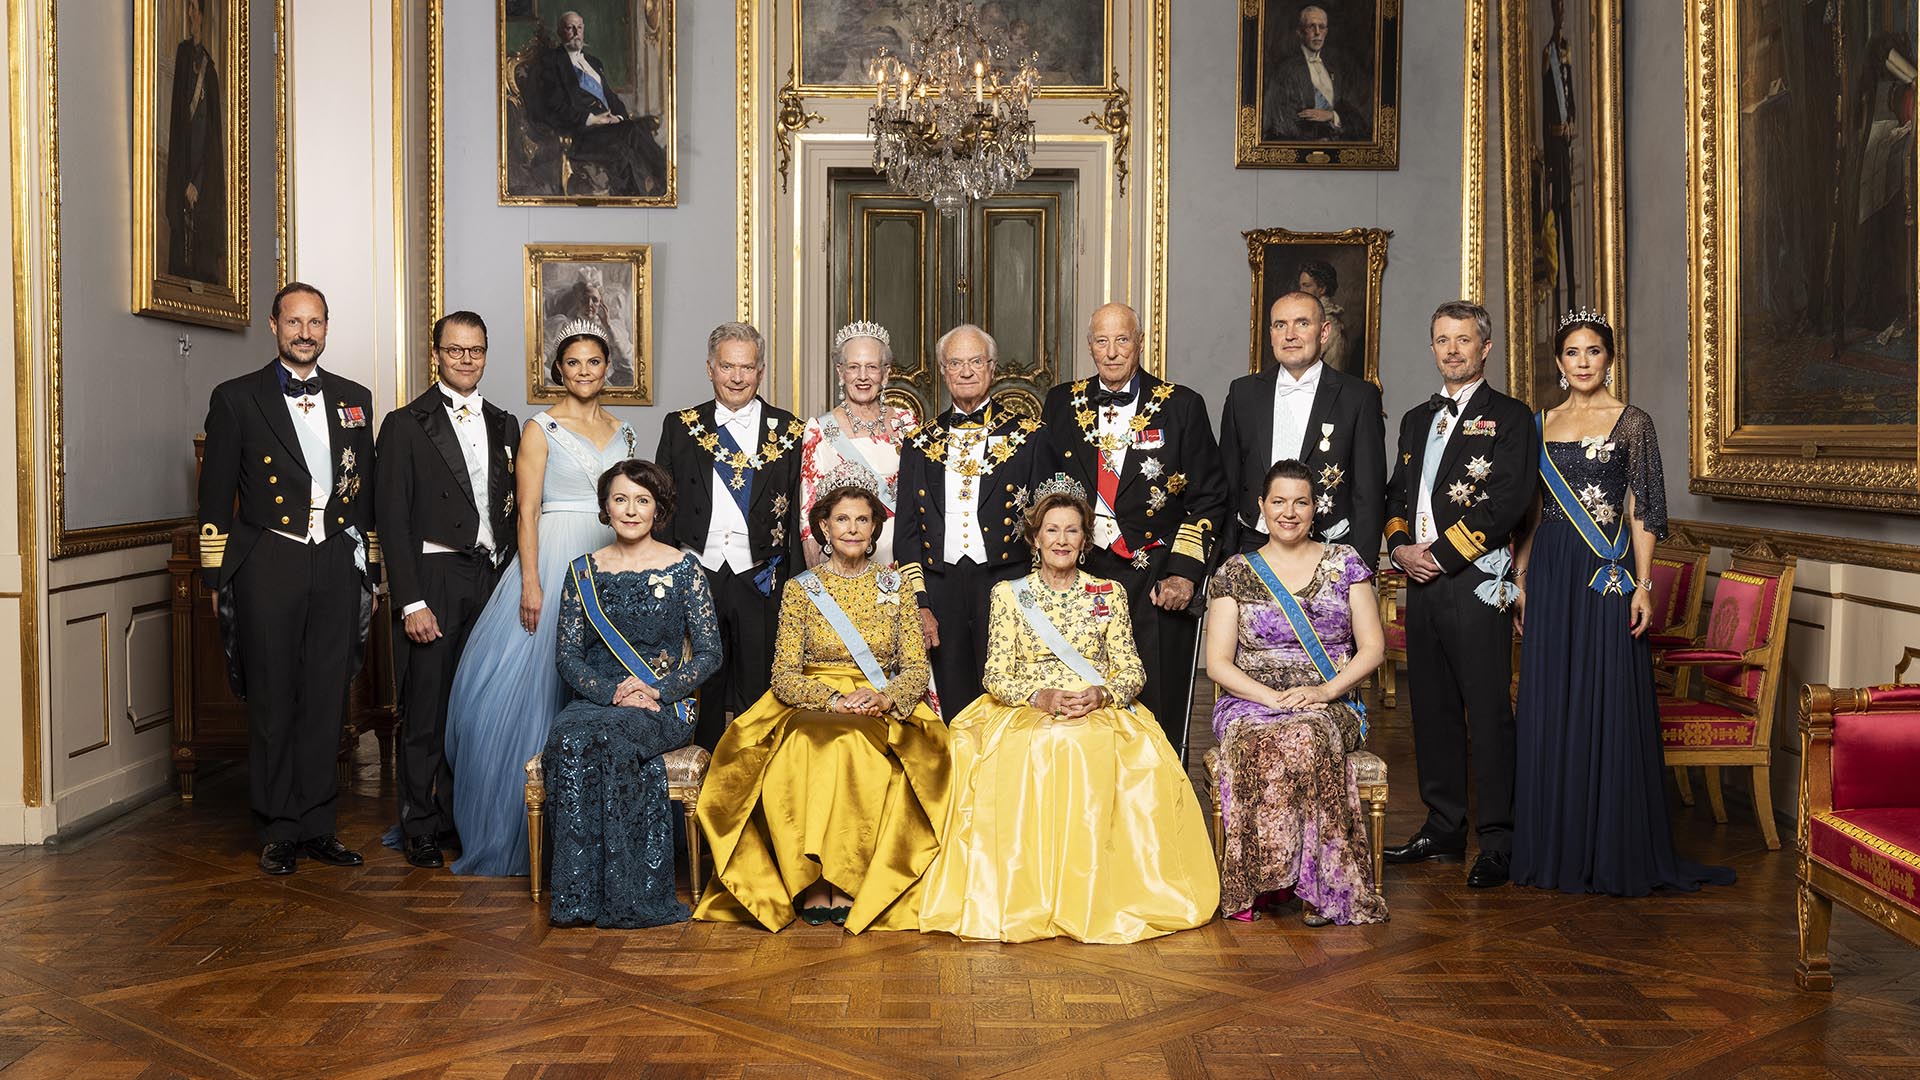 Rei Carl XVI Gustaf